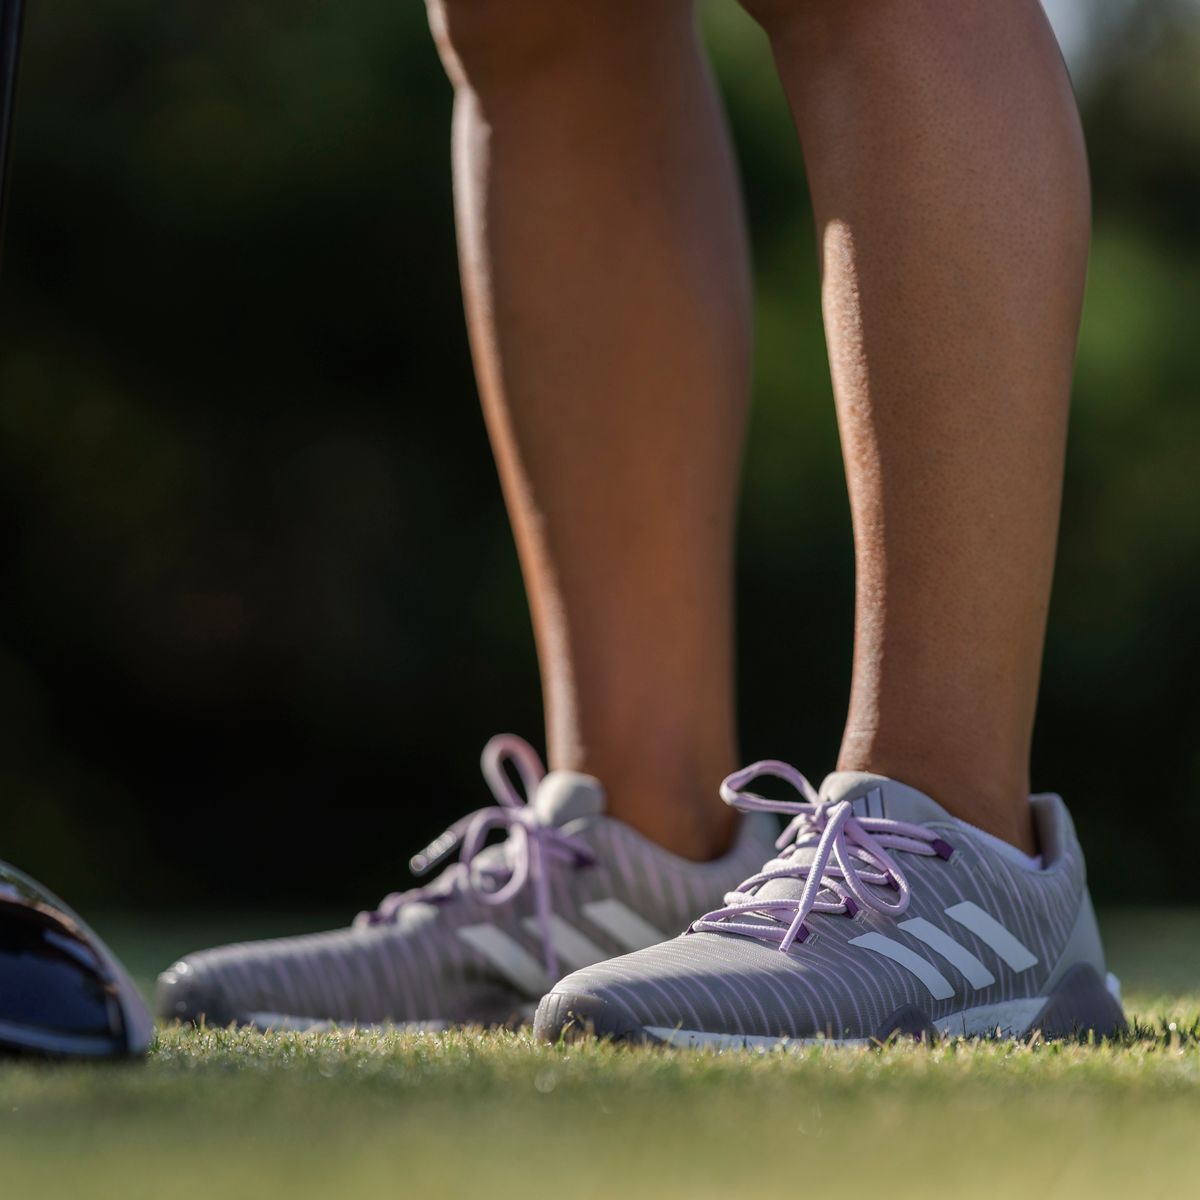 women's codechaos golf shoes